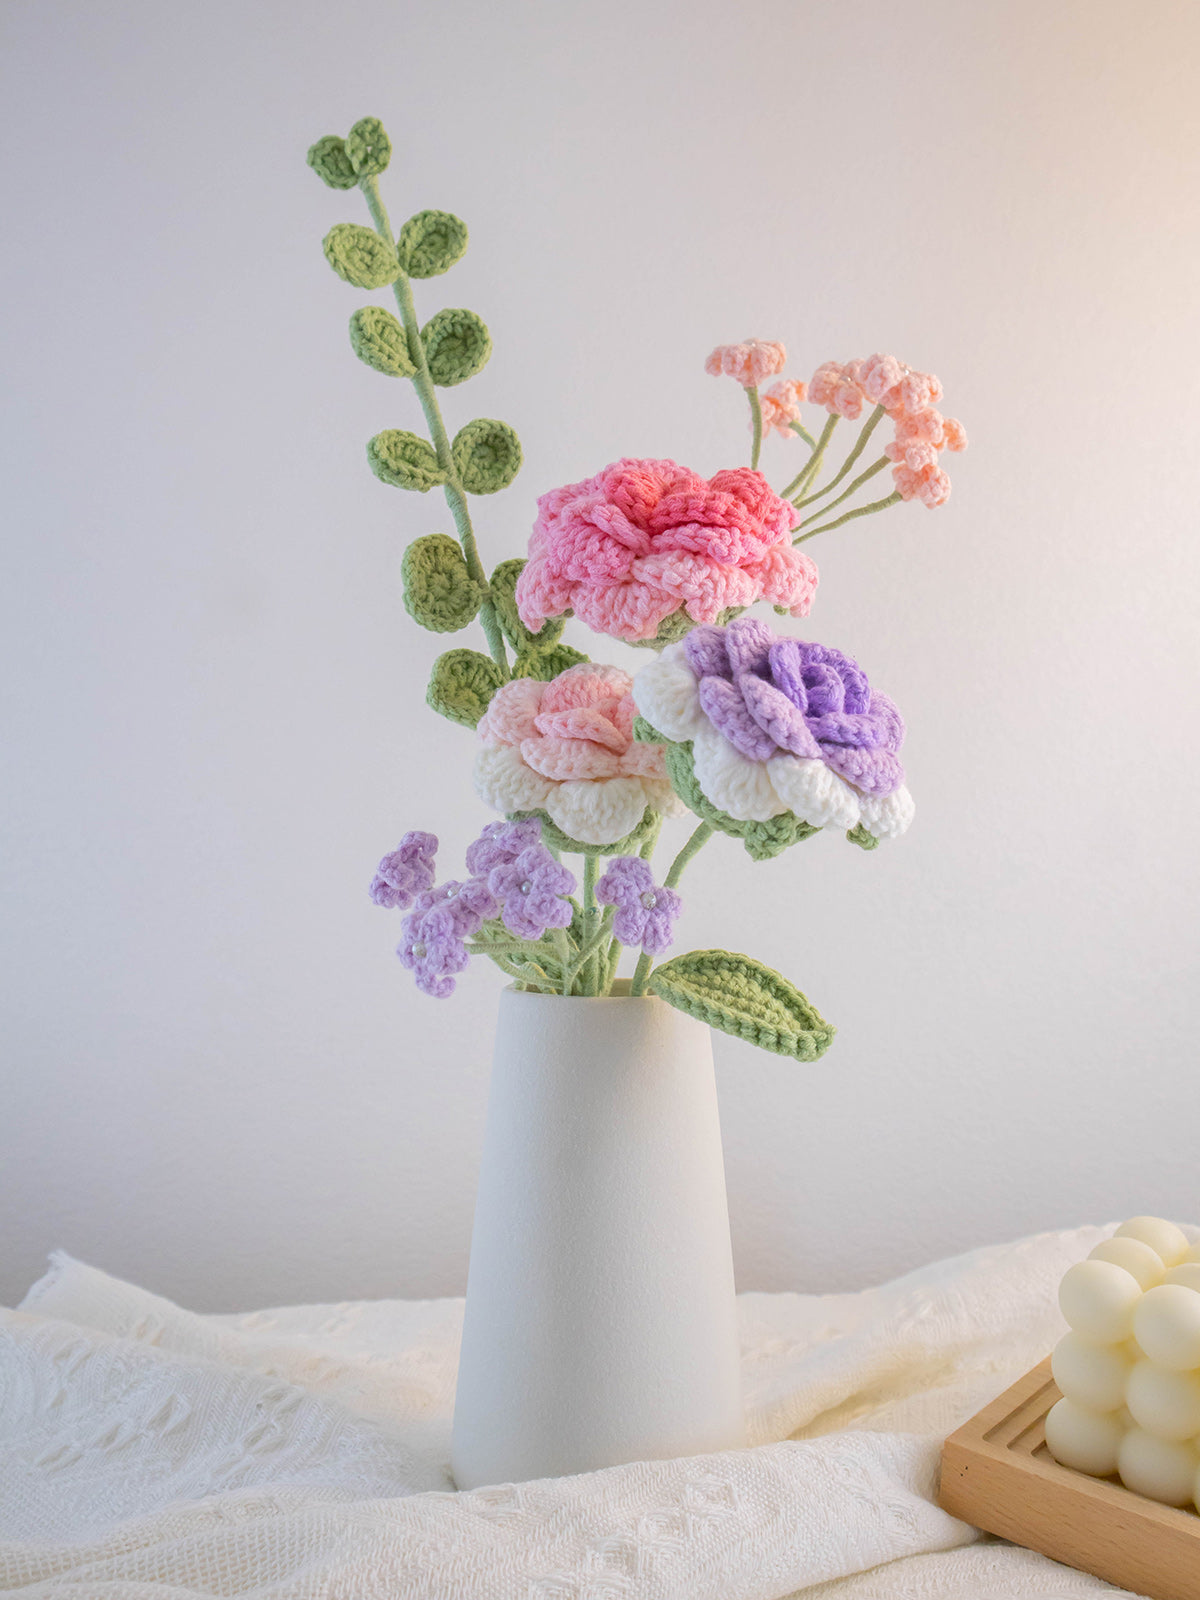 Crochet Flower Bouquet Valentine's Gift for Her